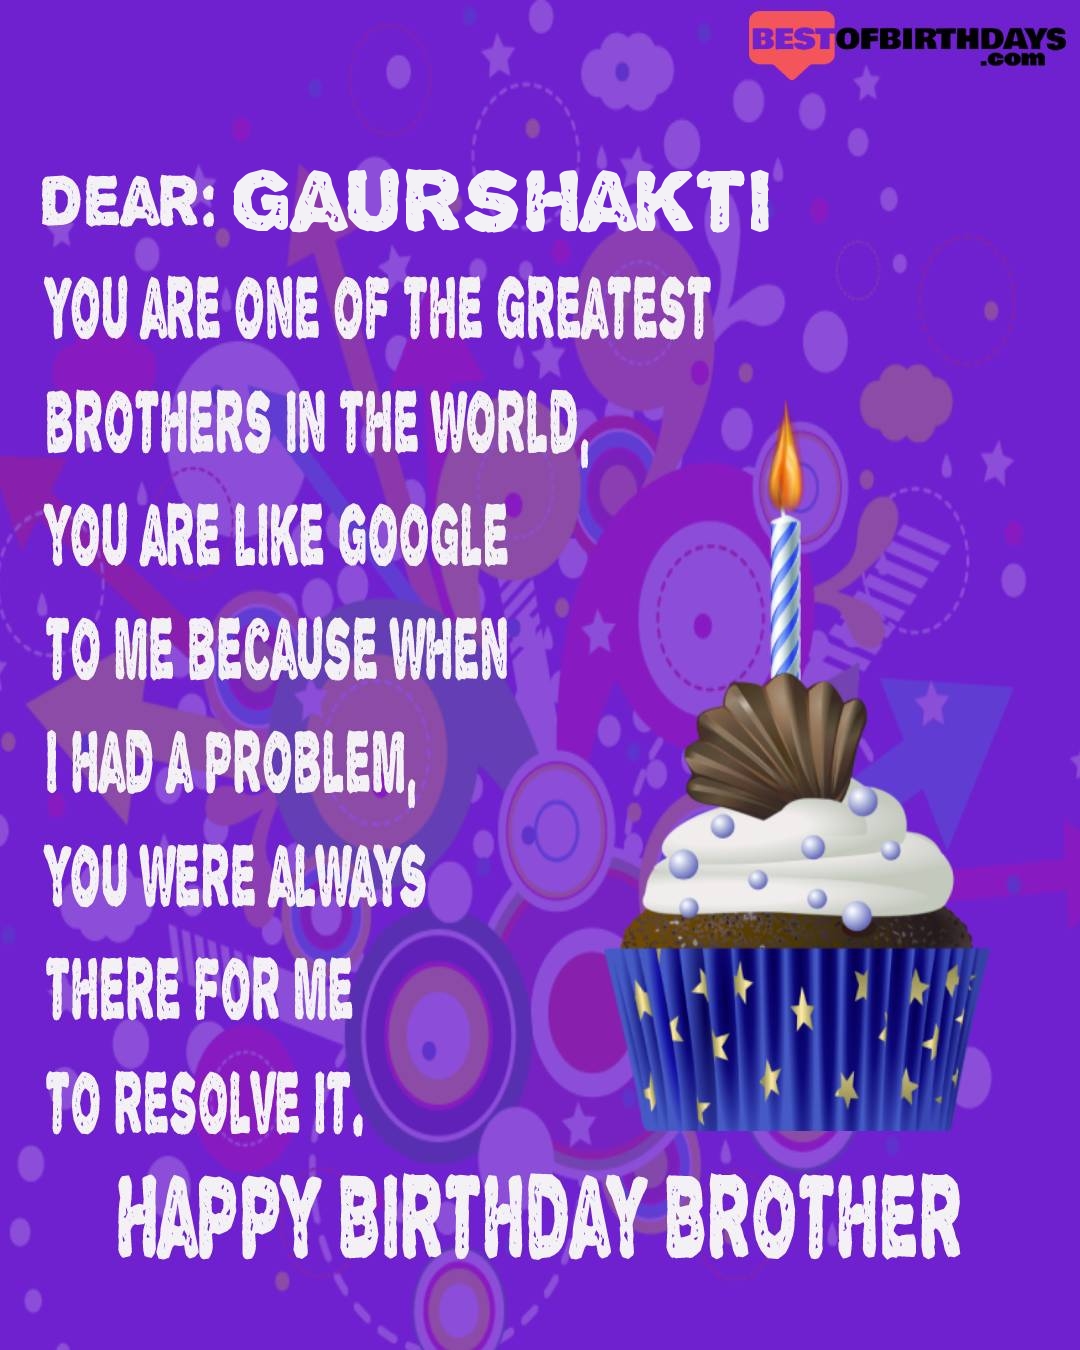 Happy birthday gaurshakti bhai brother bro